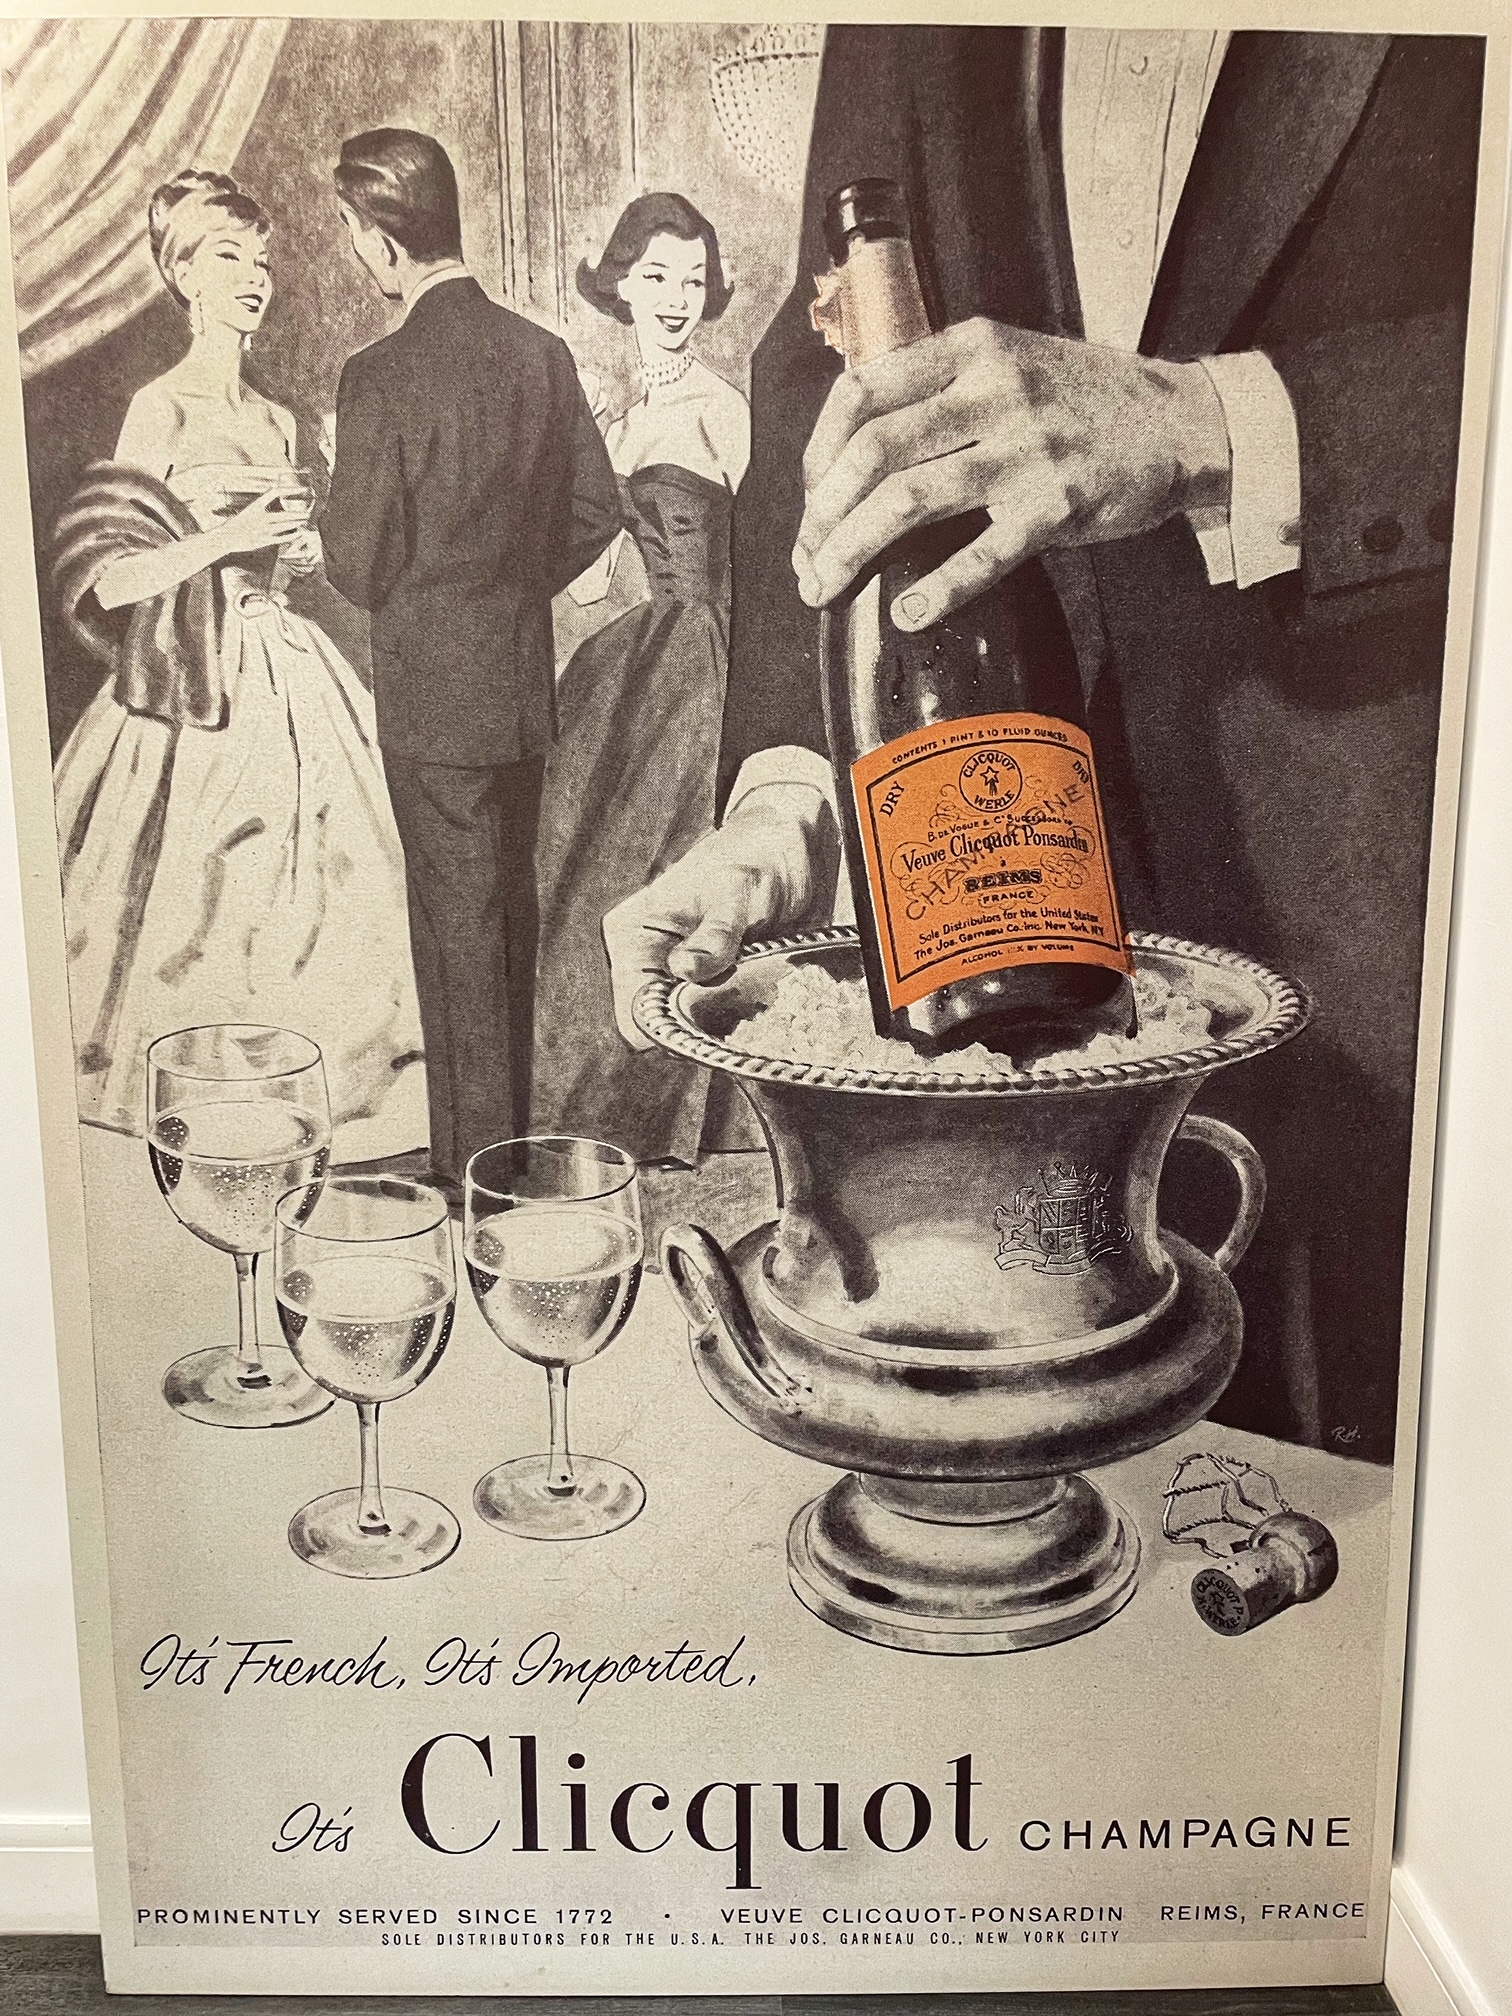 veuve clicquot champagne france, the-alyst.com